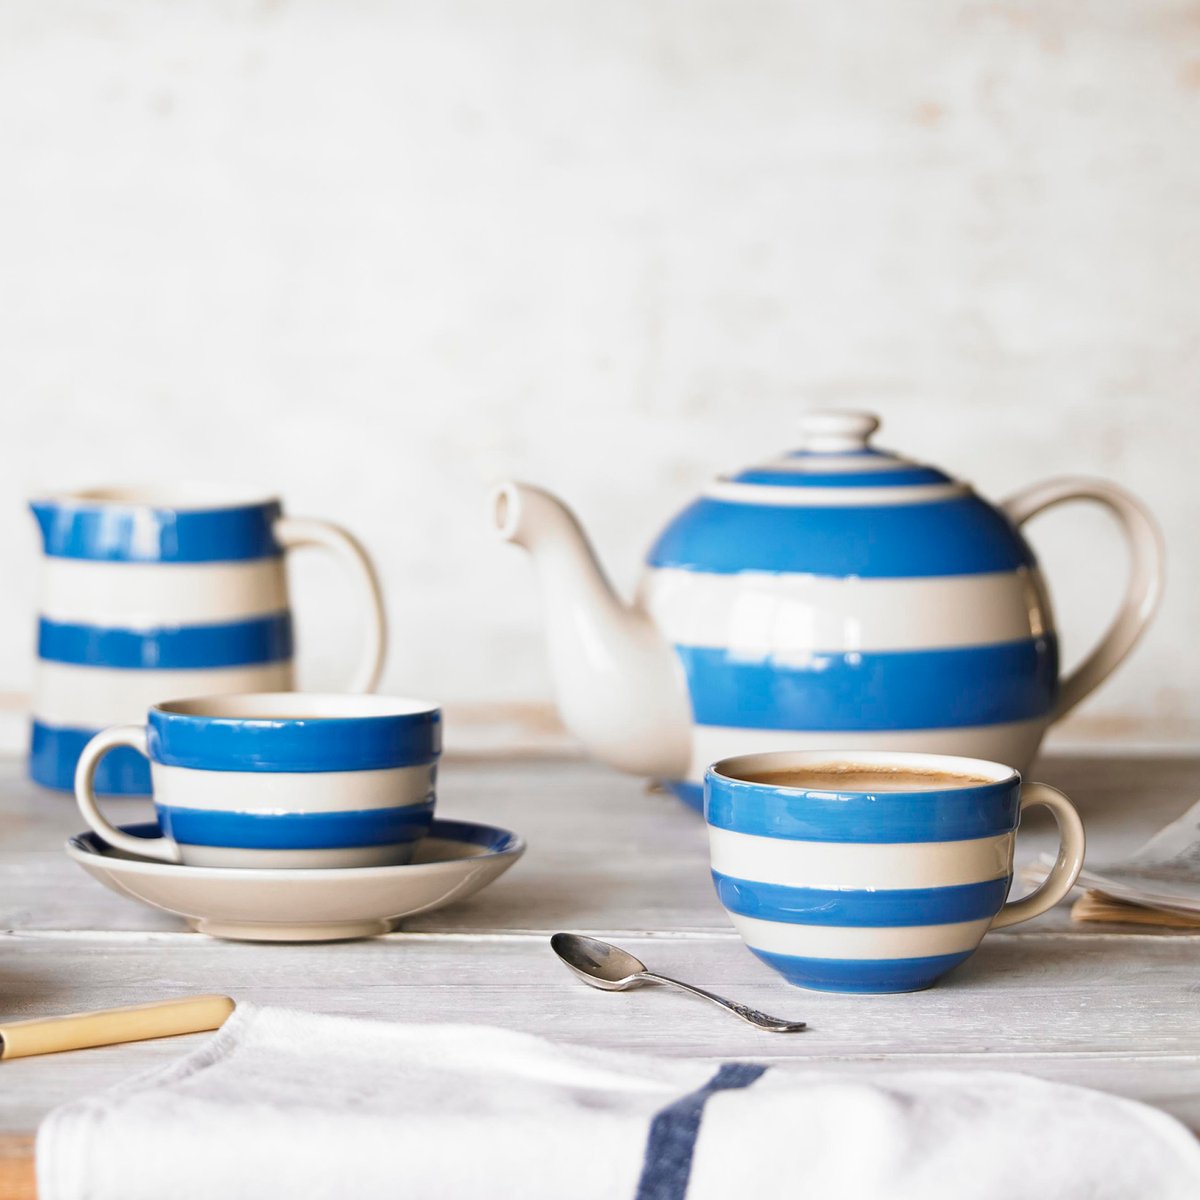 Fancy winning a £200 Beaufort & Blake voucher AND a beautiful Cornishware tea set? Head on over to Instagram to enter! instagram.com/p/CL_zKUPJfN1/